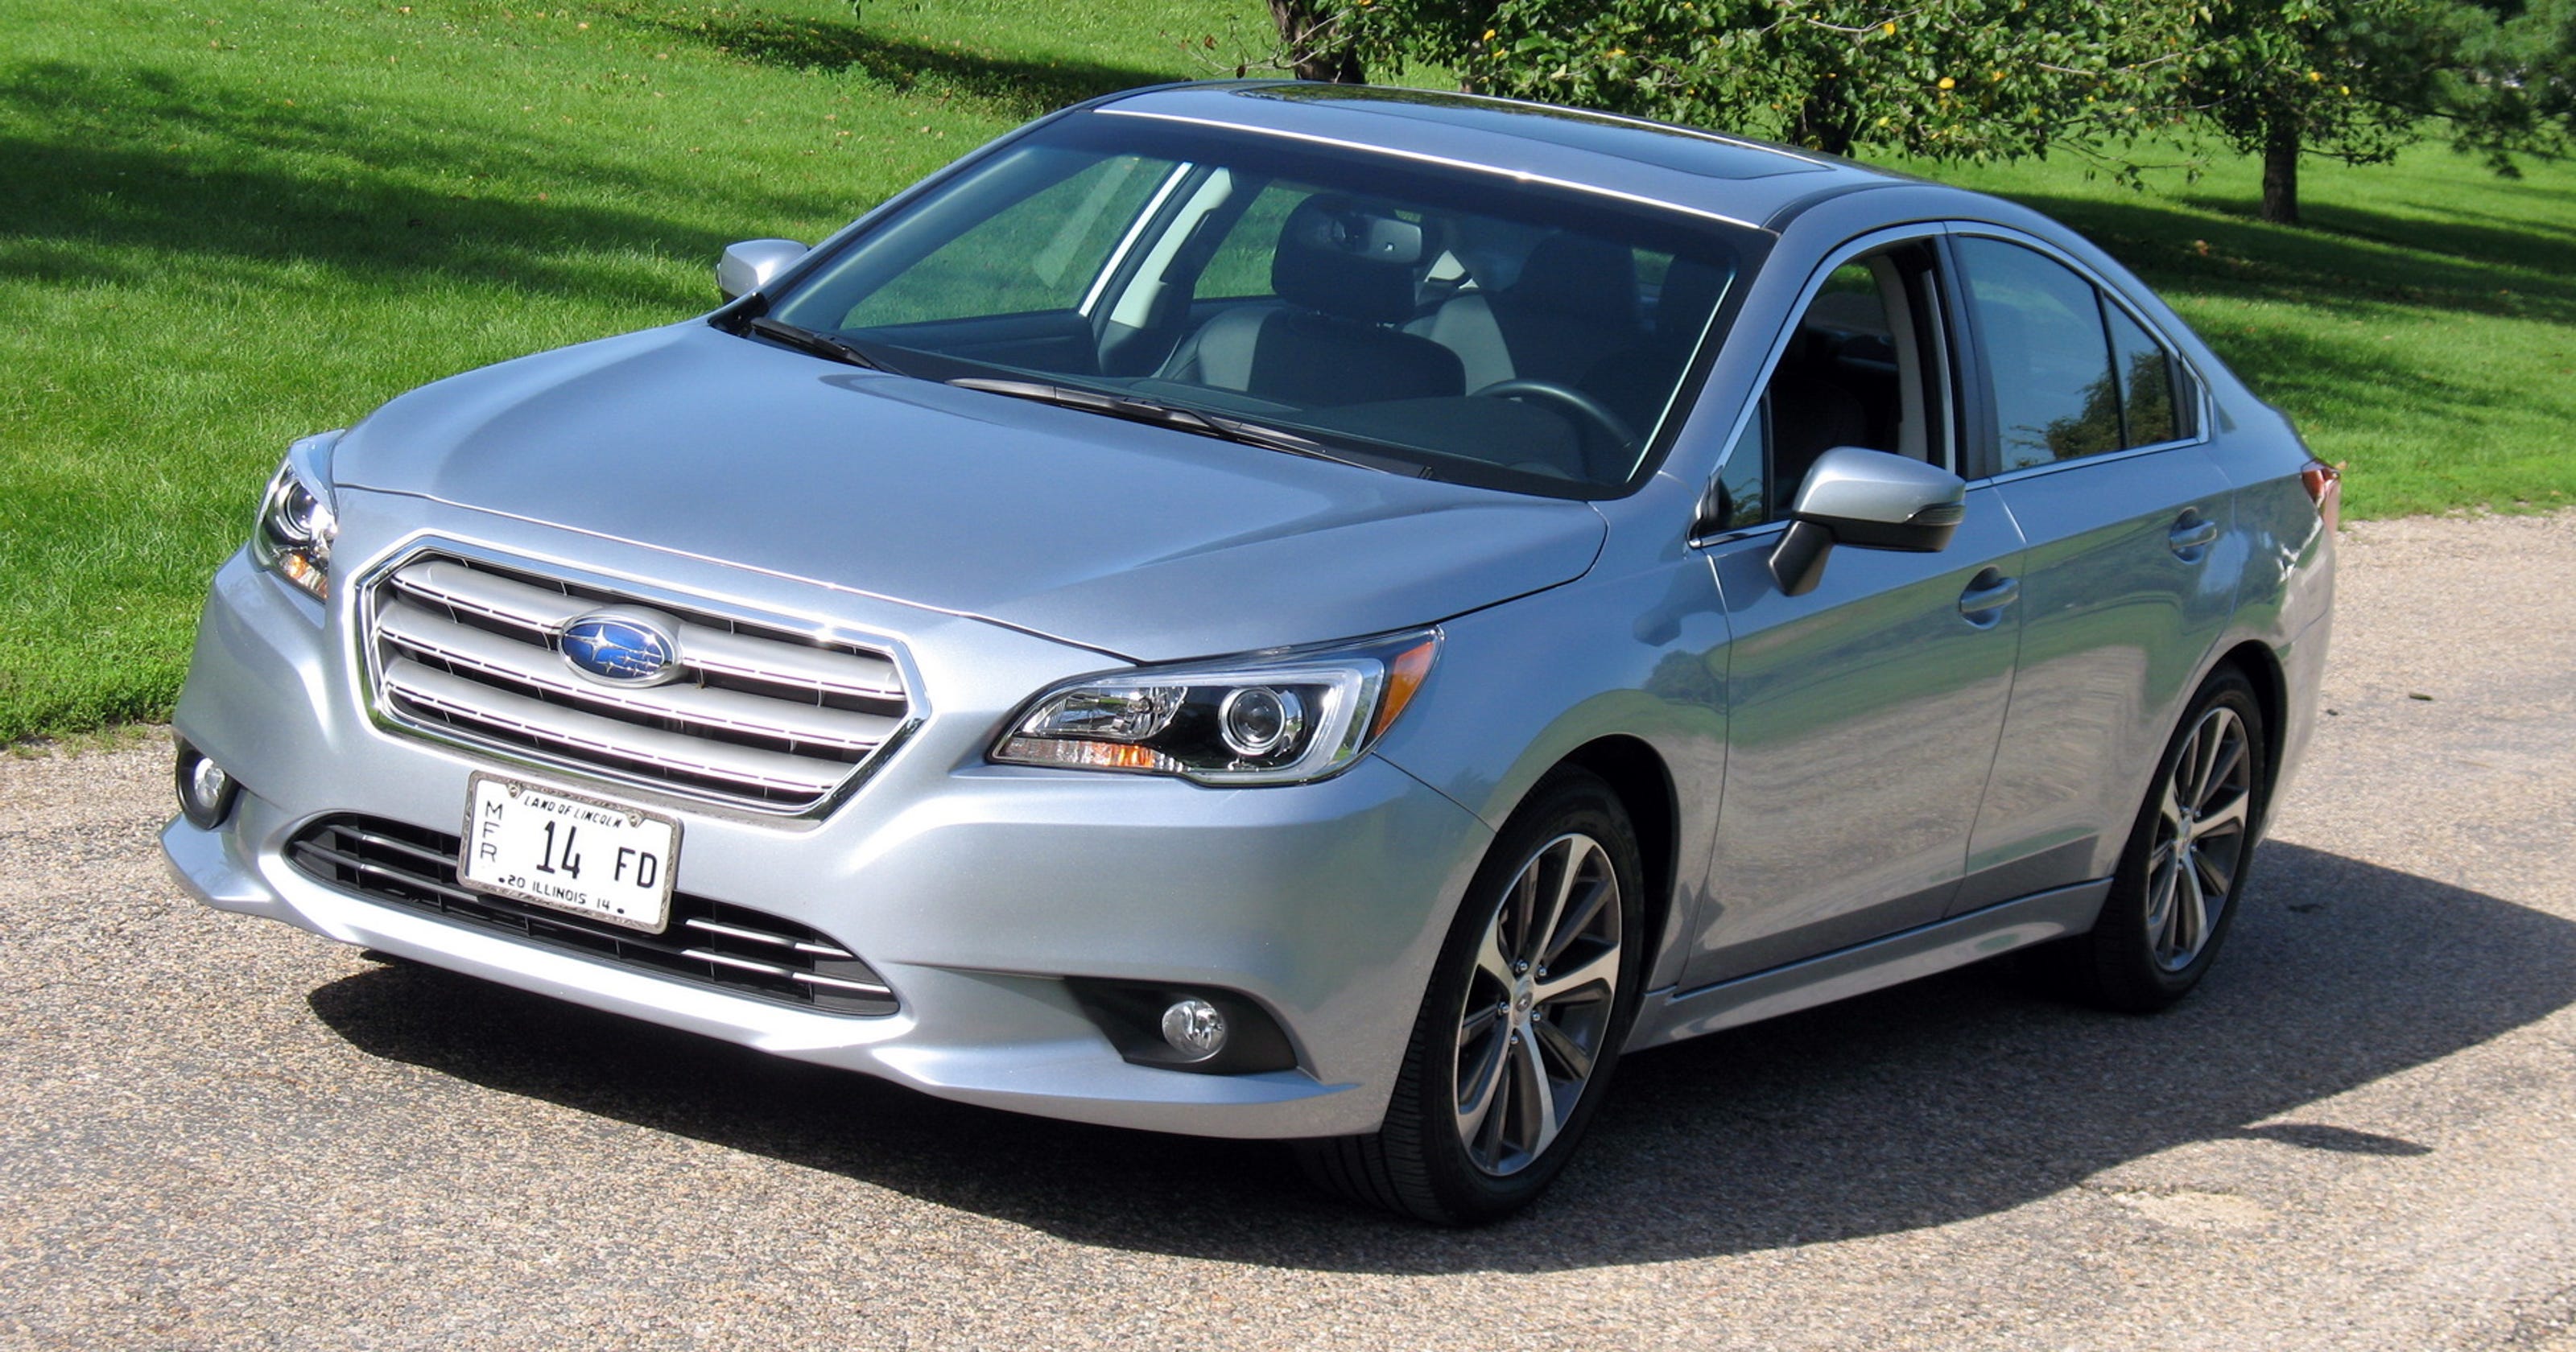 2015 Subaru Legacy features style, safety, luxury